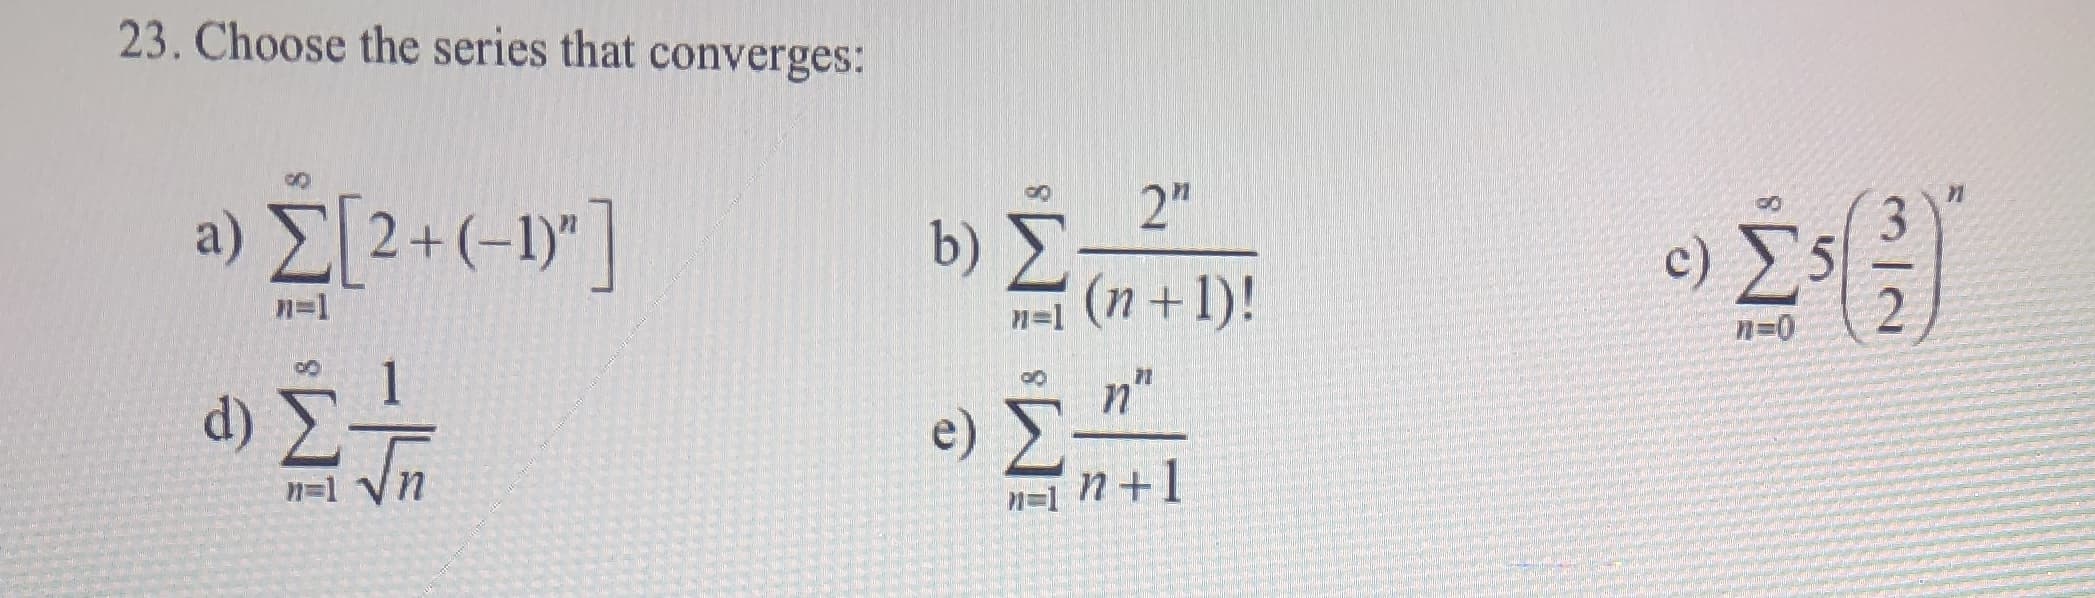 23. Choose the series that converges:
2"
b) Σ
(n+1)!
Θ ΣΙ2--]
3
Ο Σ
2
n-1
n=1
n-0
1
d)
ο Σ
n
e)
n=1 n1
n-1
-5
